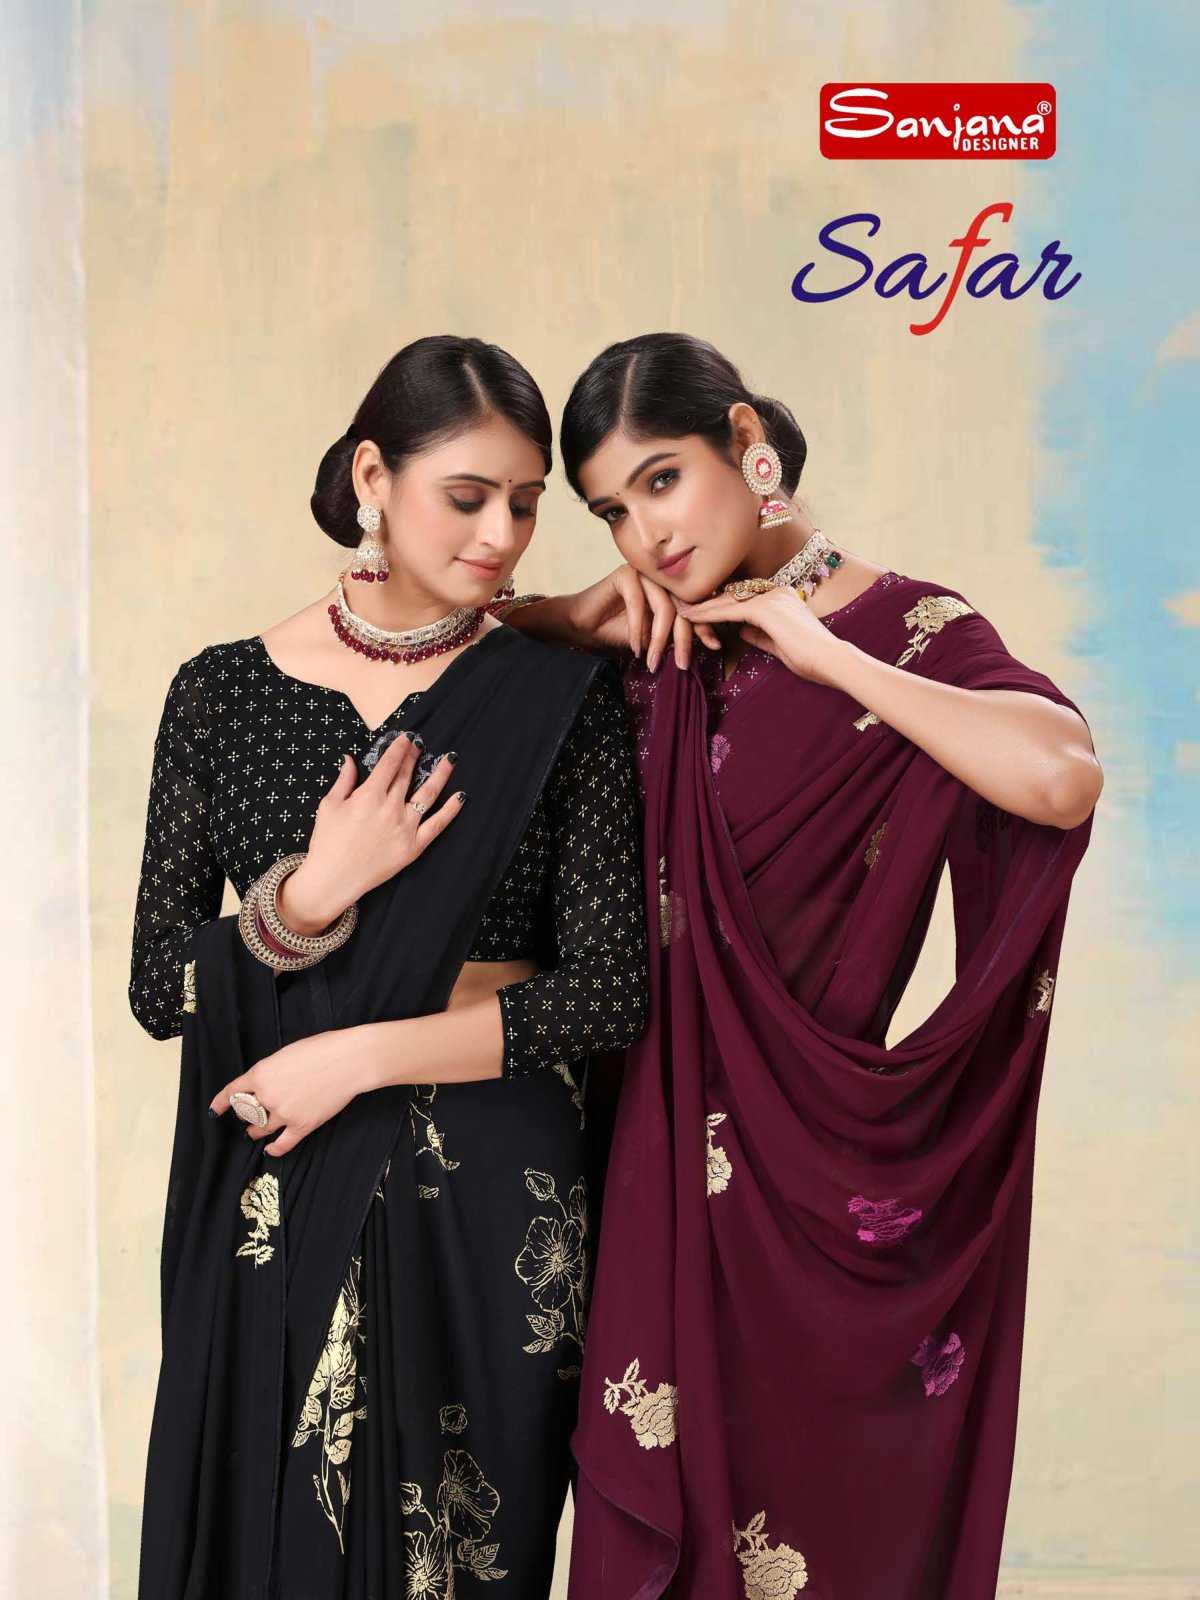 sanjana designer safar adorable casual weightless sarees supplier